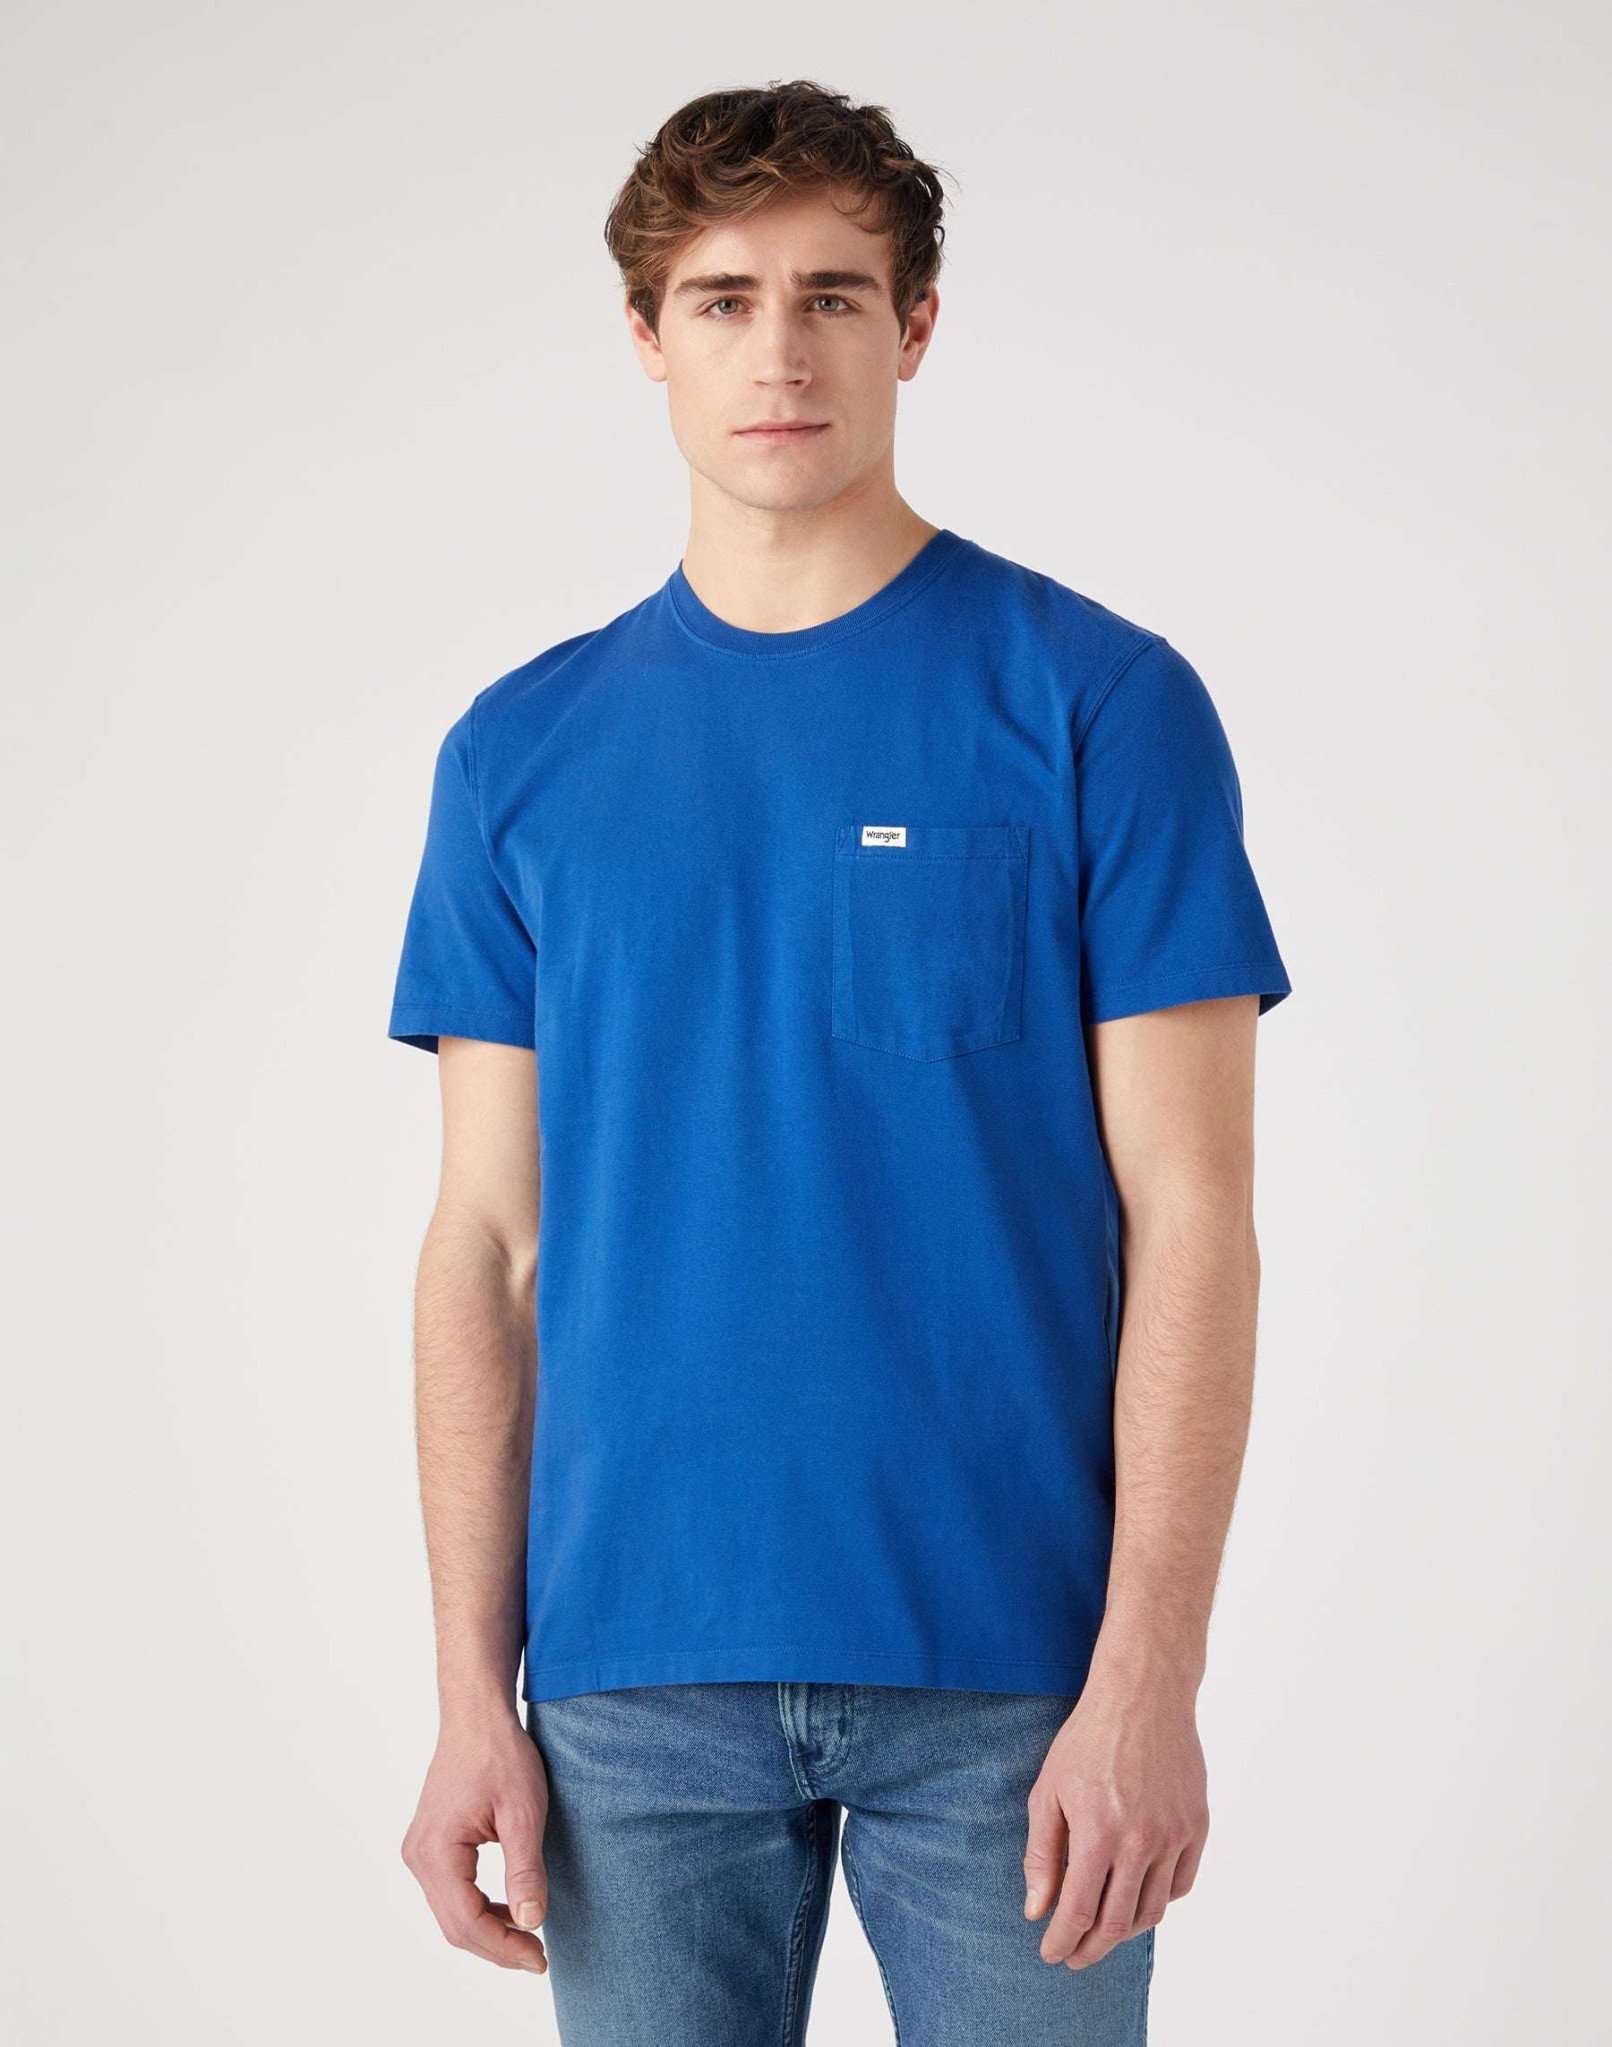 Pocket Tee in True Blue T-Shirts Wrangler   